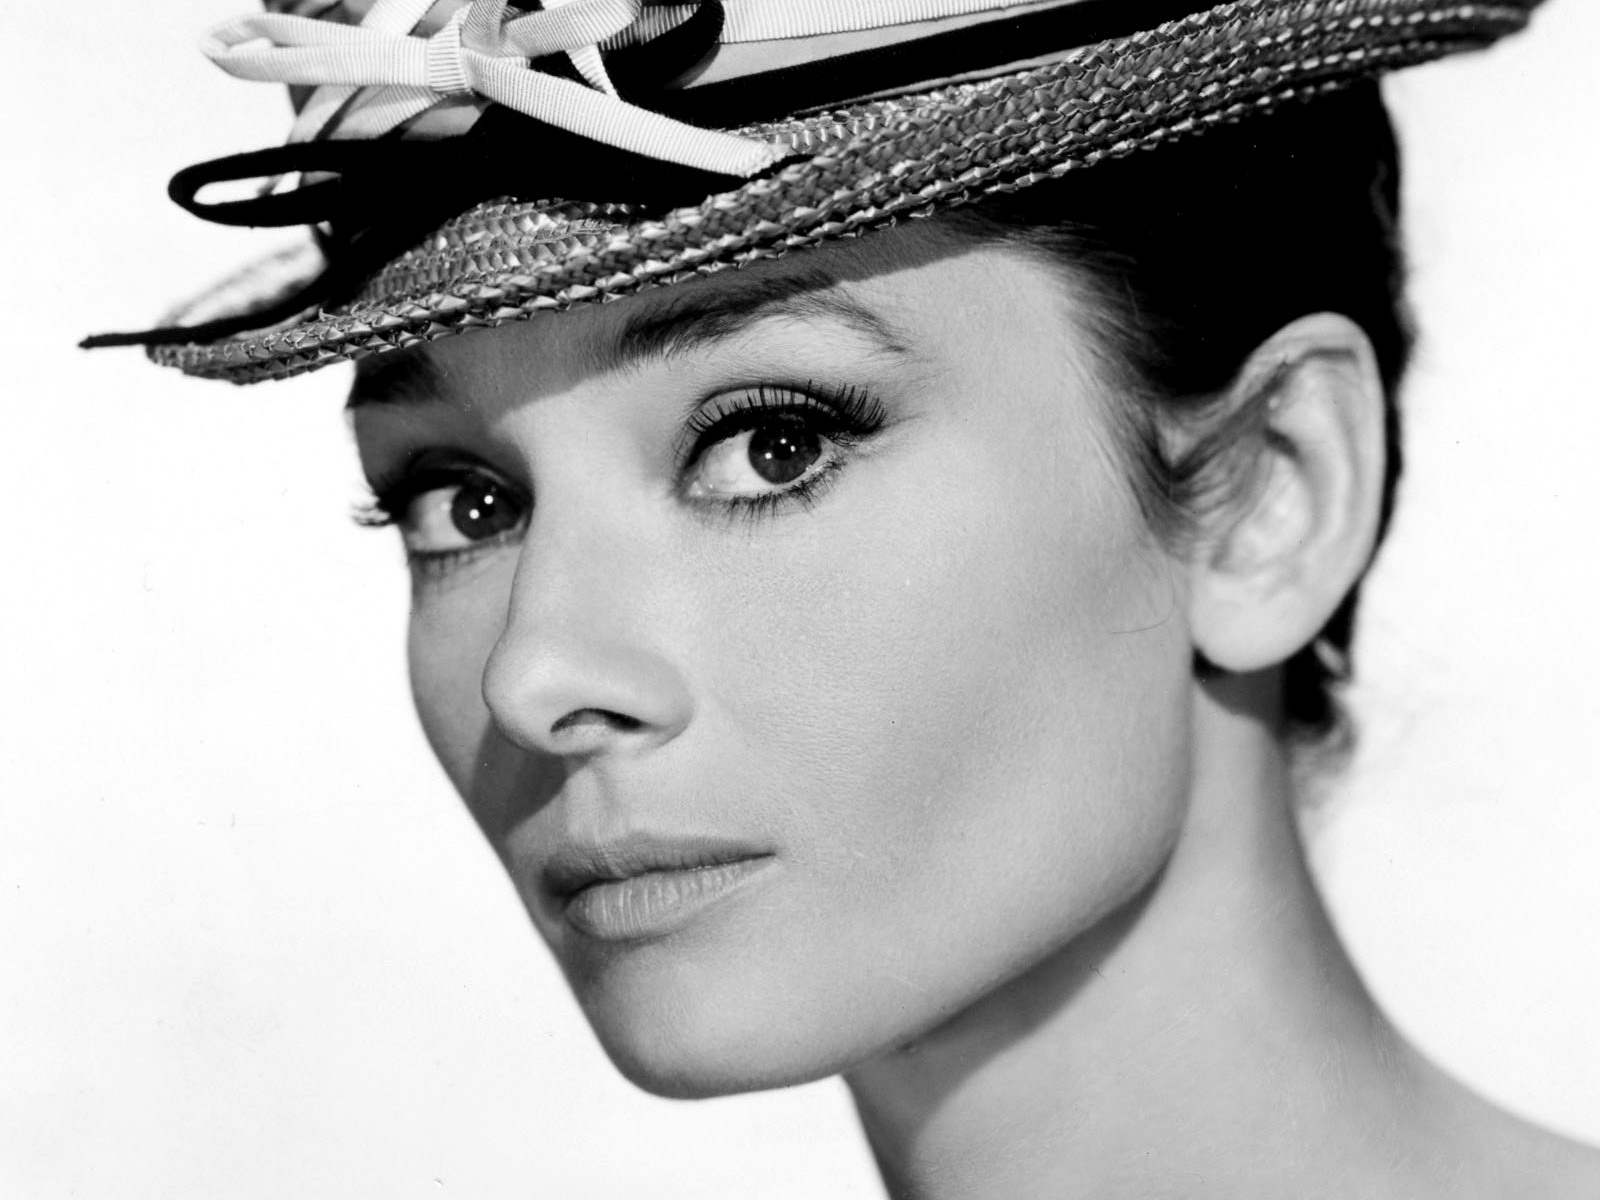 19x Audrey Hepburn Hat Images 19x Resolution Wallpaper Hd Celebrities 4k Wallpapers Images Photos And Background Wallpapers Den